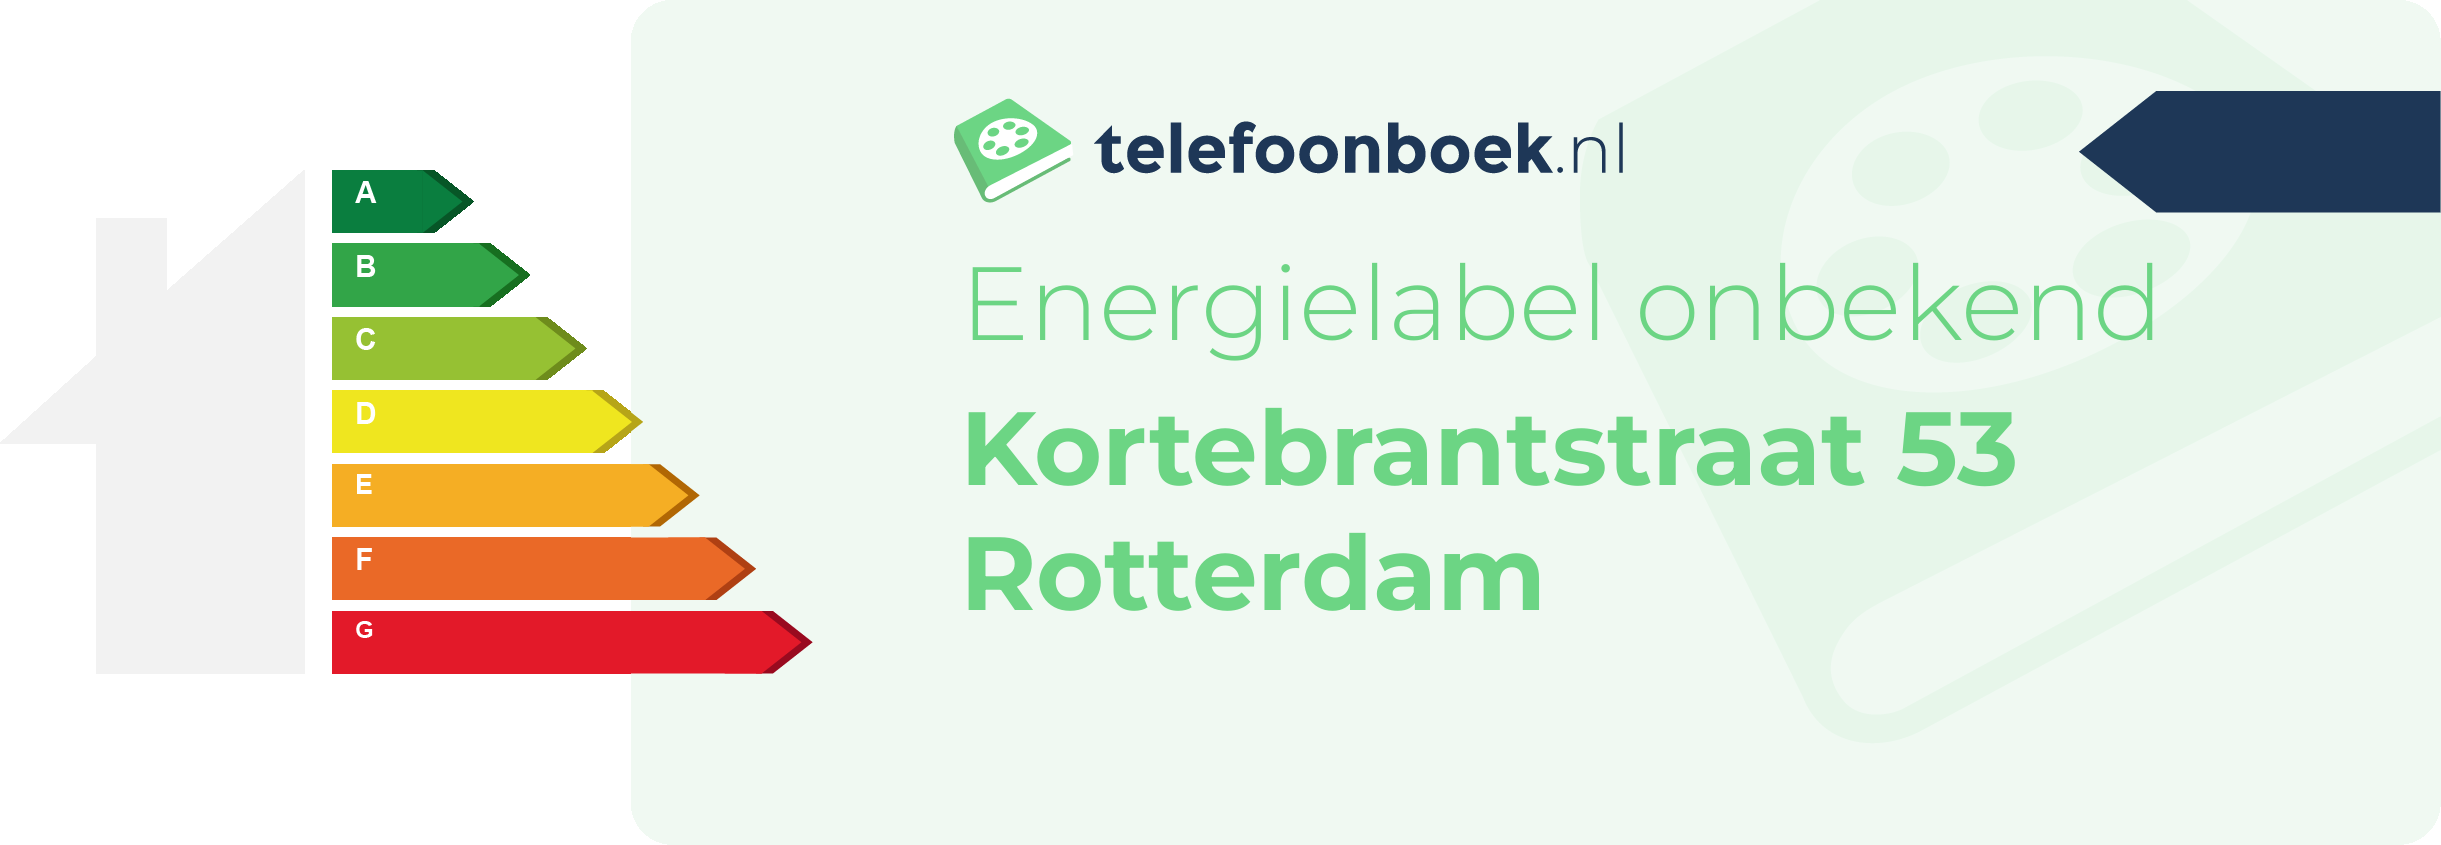 Energielabel Kortebrantstraat 53 Rotterdam